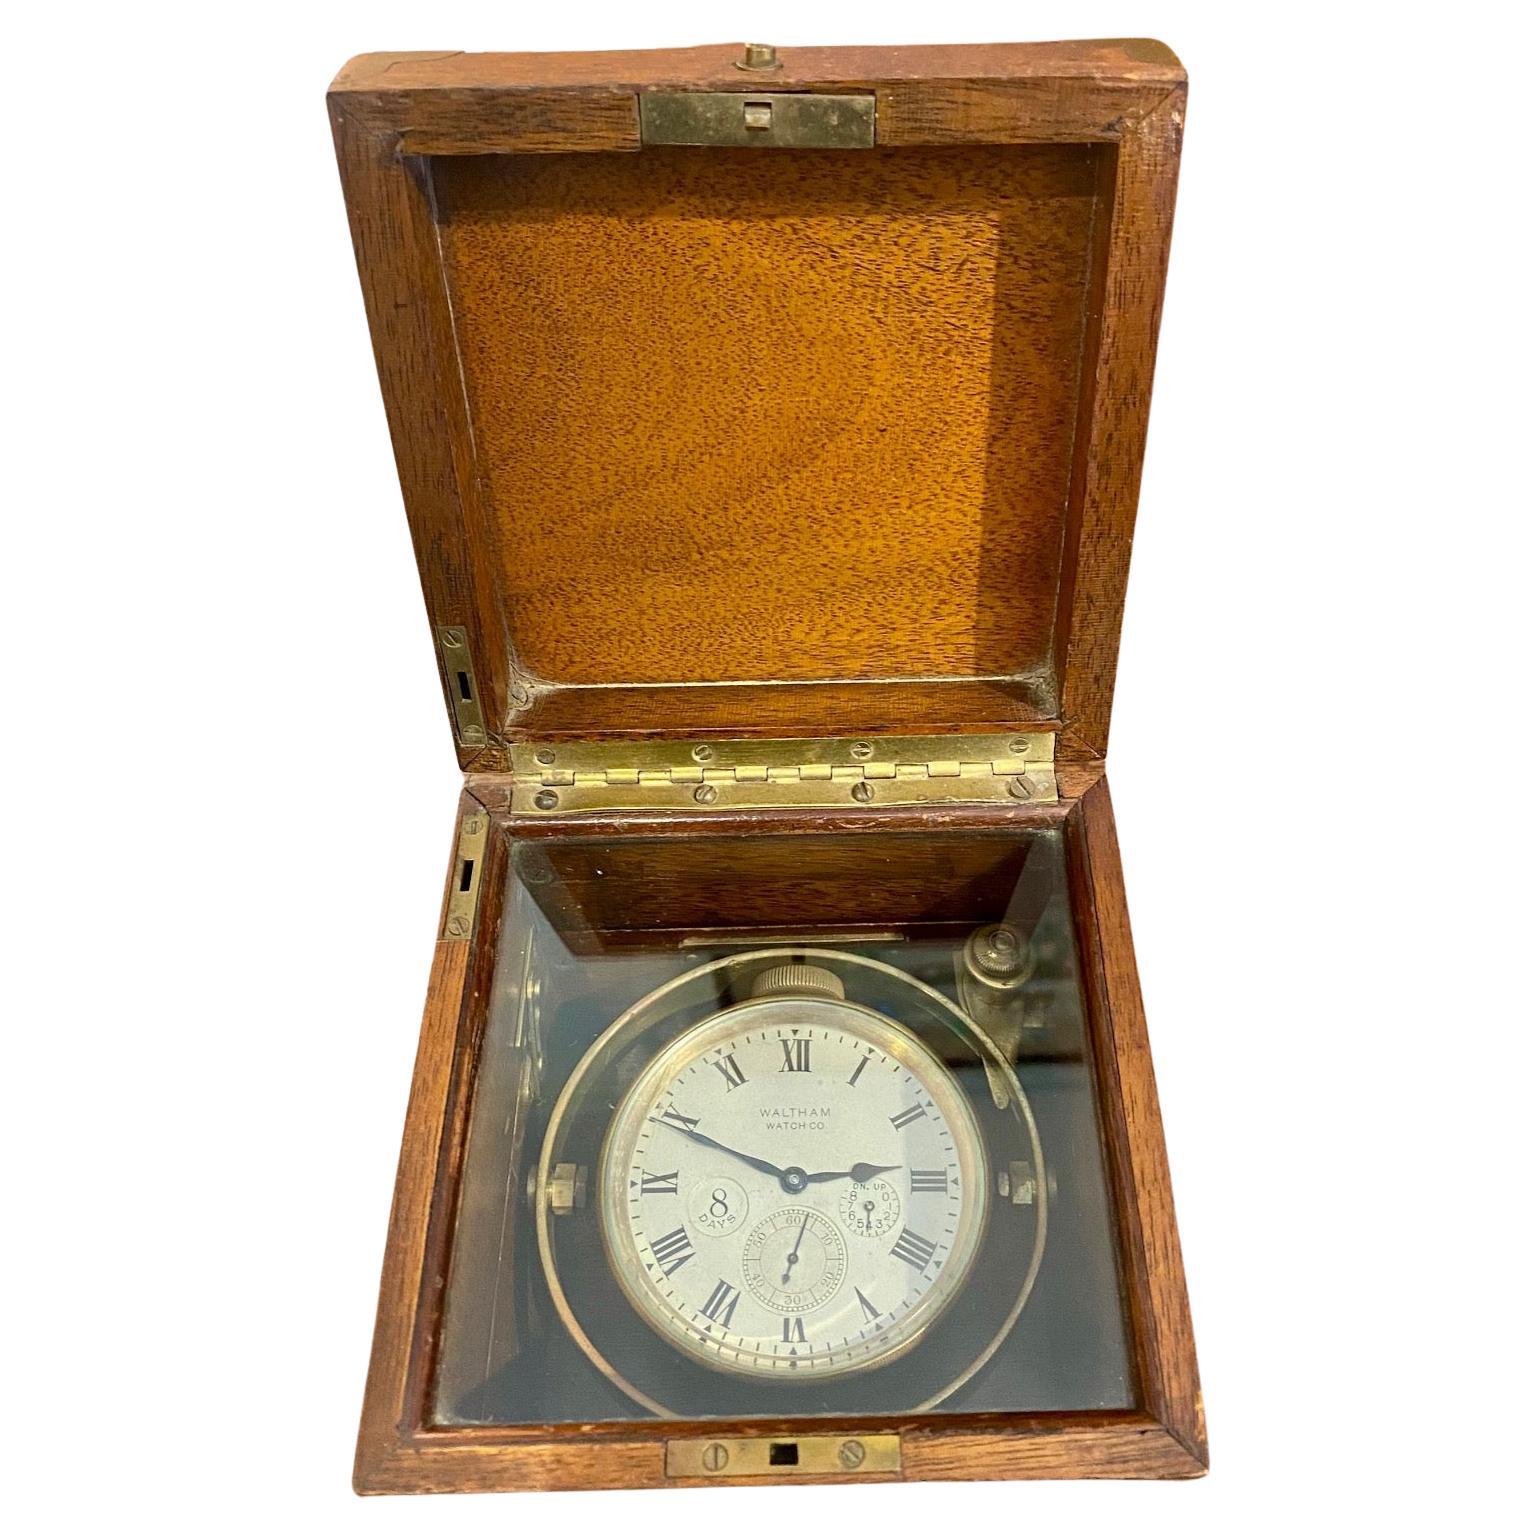 Waltham Ship's Chronometer